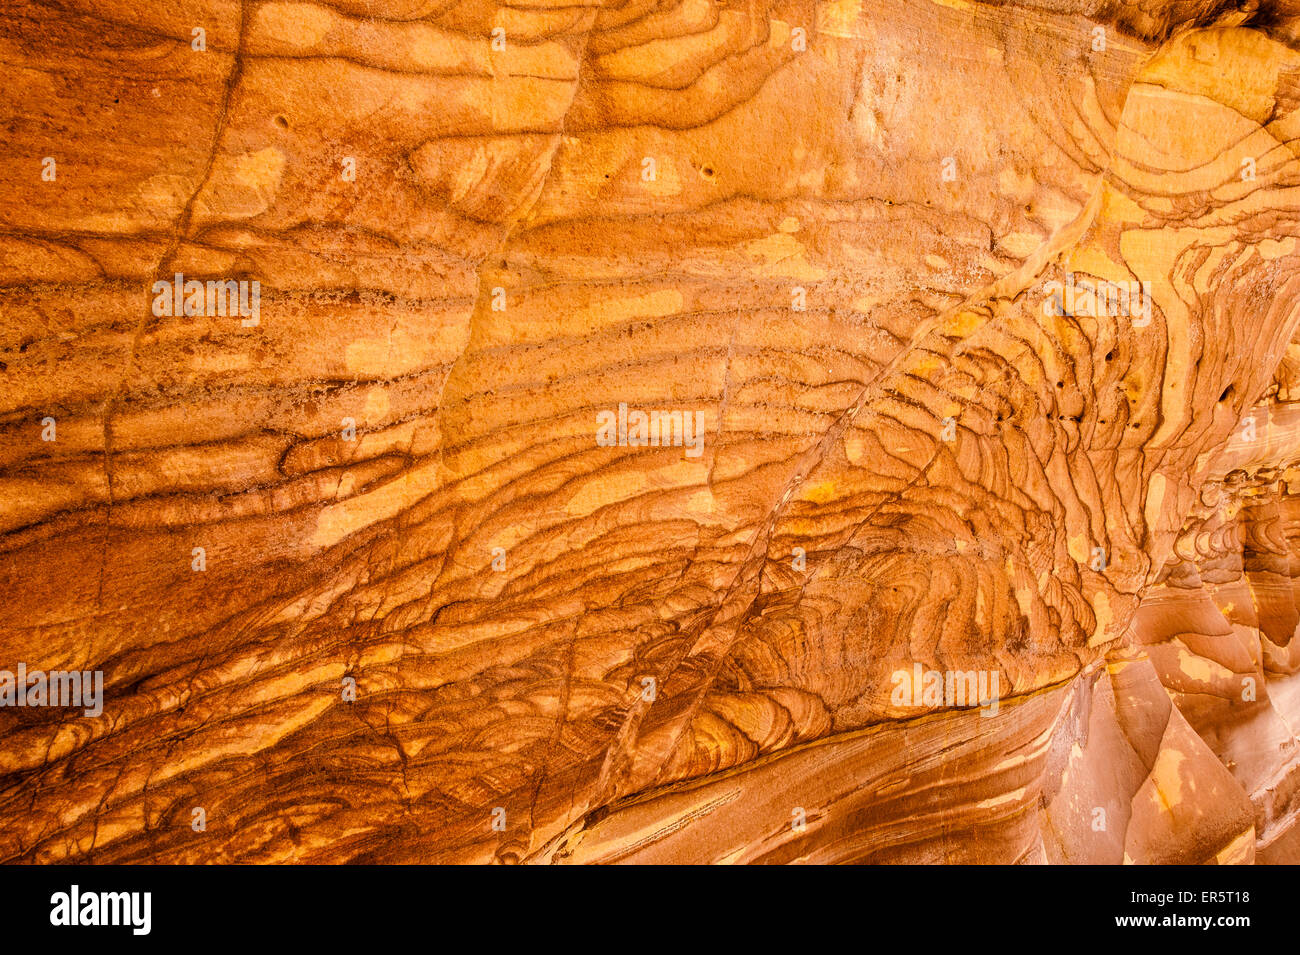 Sedimentary rock structure, Wadi Mujib, Jordan, Middle East Stock Photo